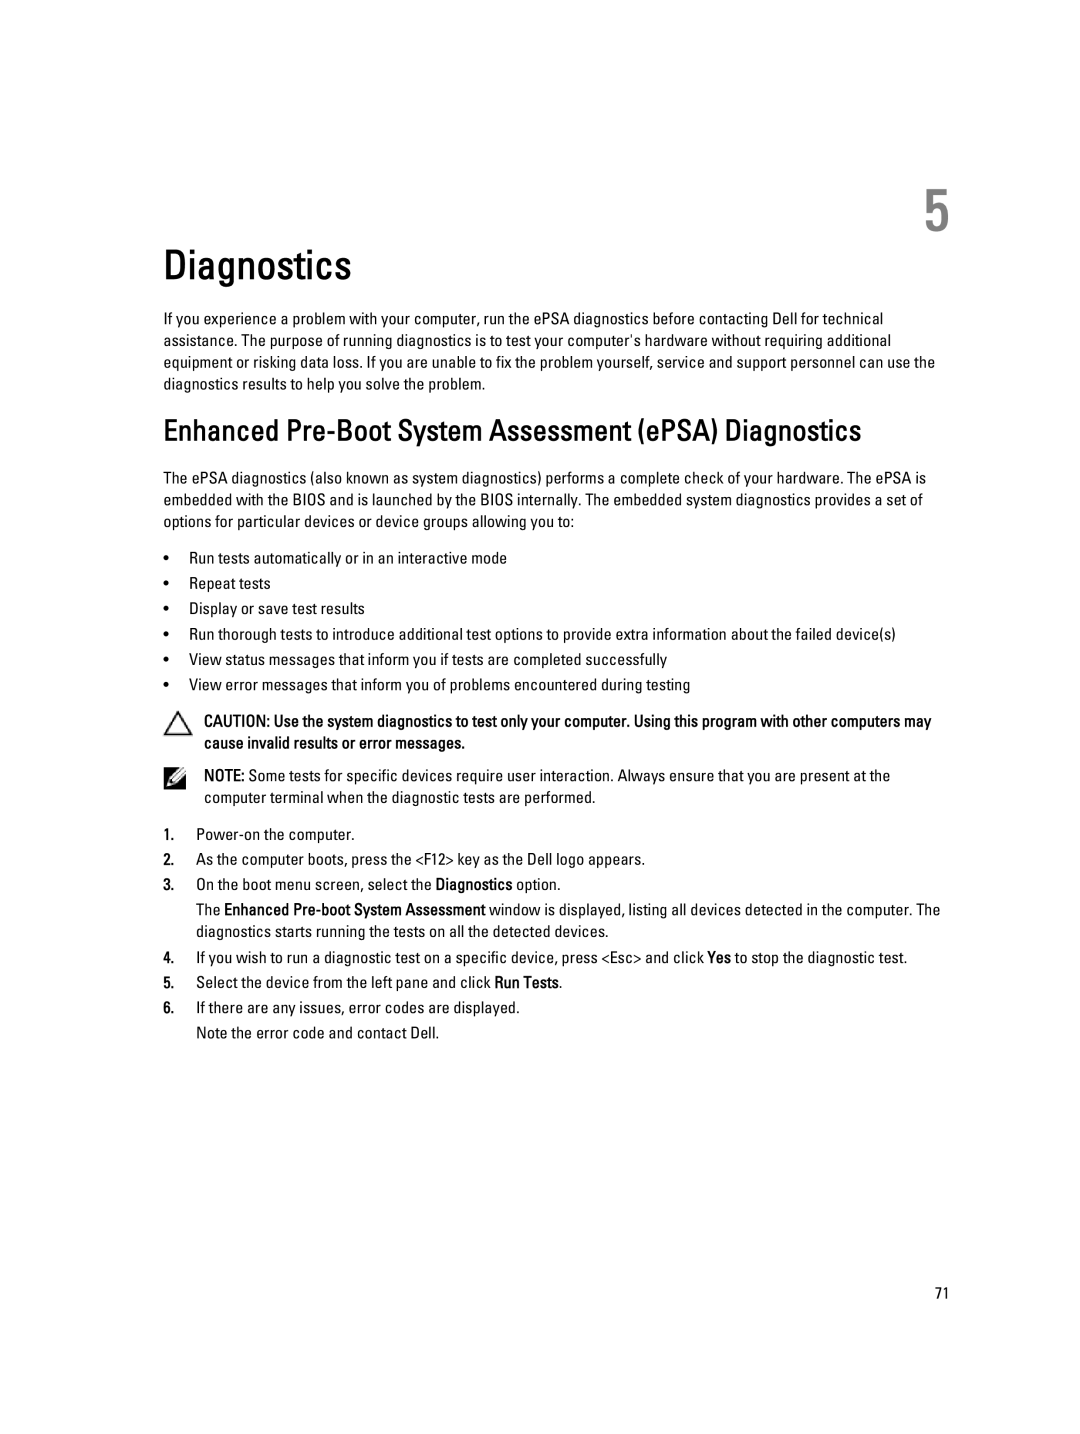 Dell E6230 owner manual Enhanced Pre-Boot System Assessment ePSA Diagnostics 